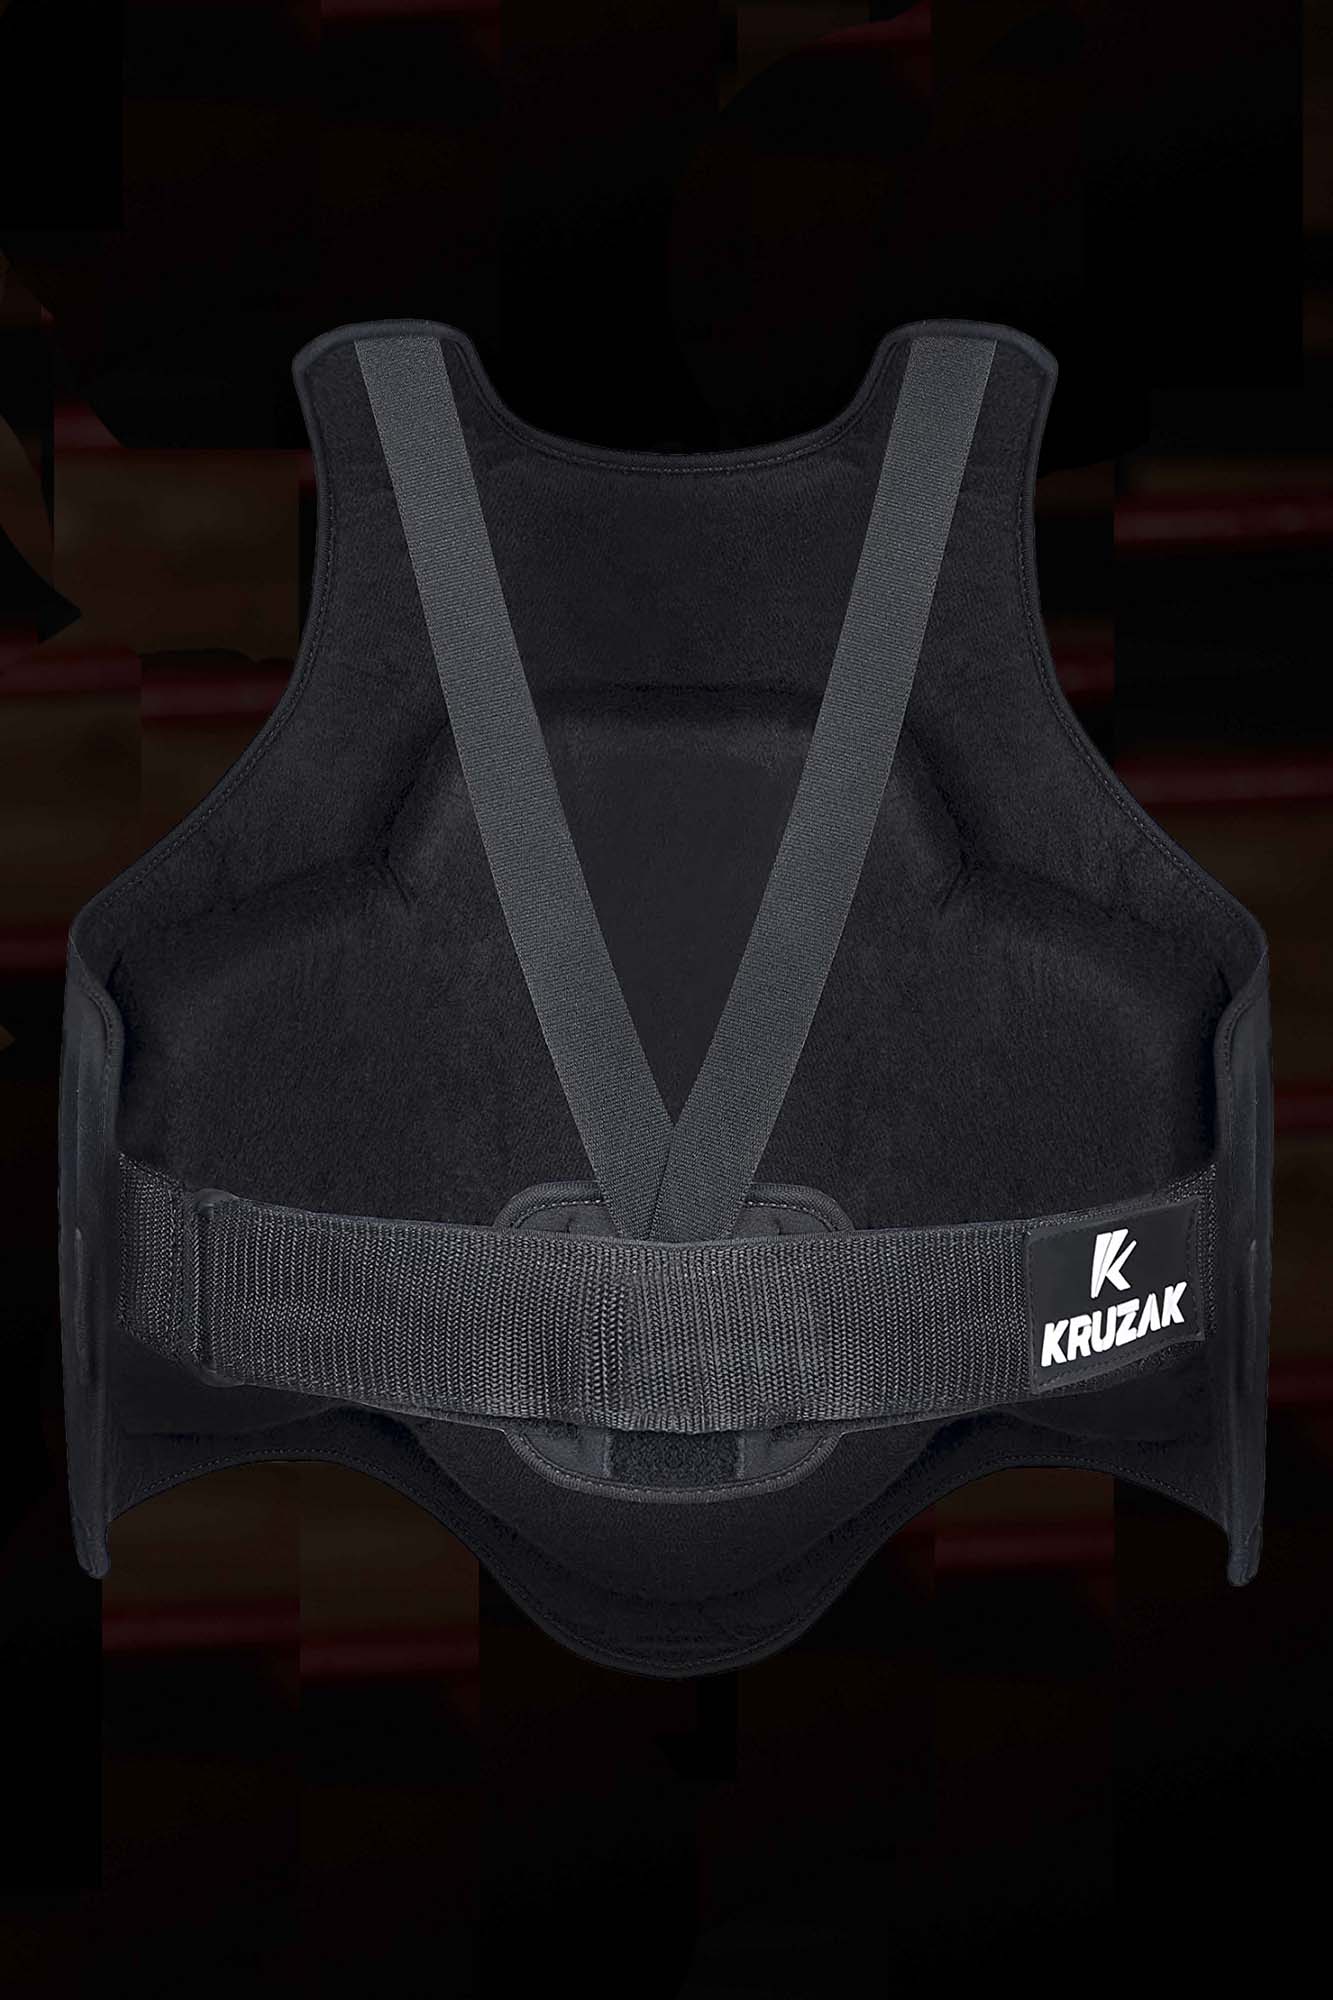 Black Unisex Body & Chest Protector - MMA Training Equipment